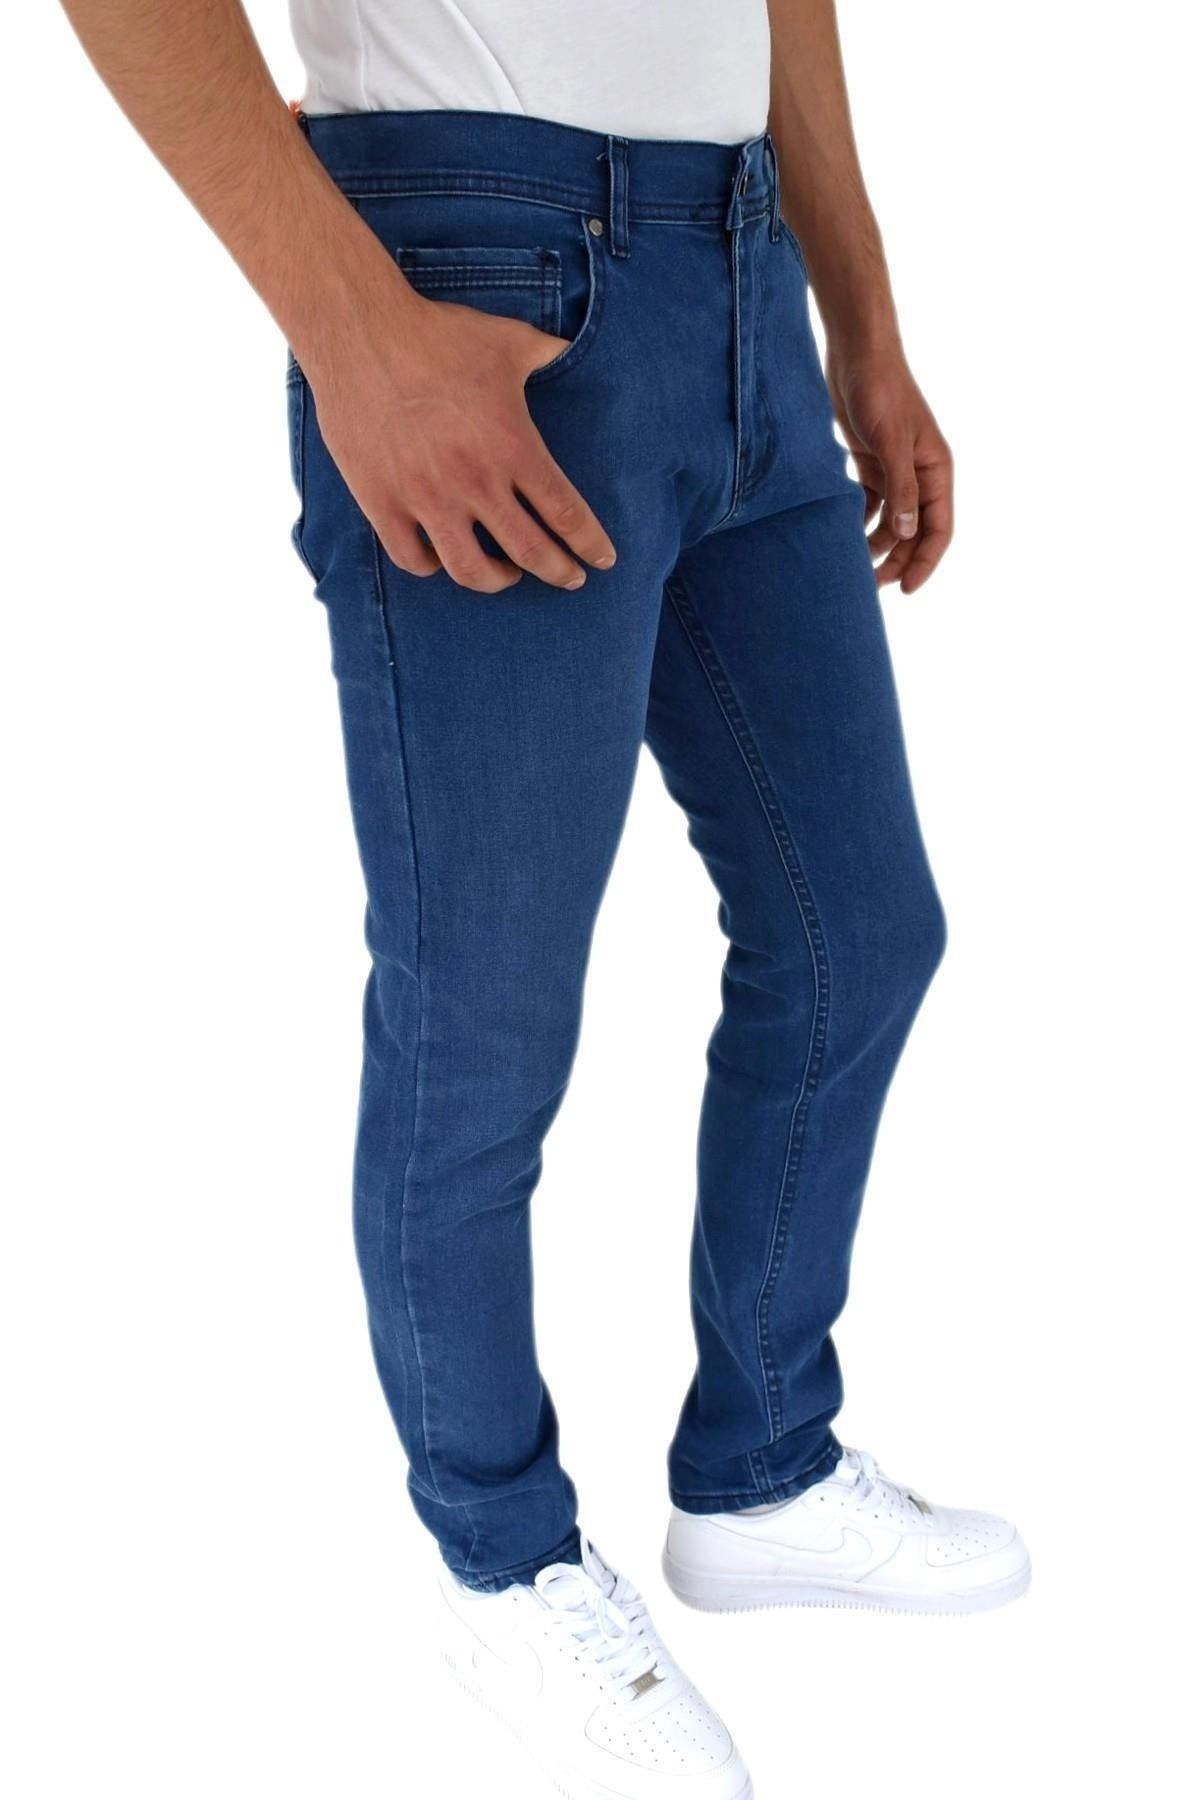 Dynamo Erkek Comfortfit Jeans Pantolon 1601 Bgl-st02915